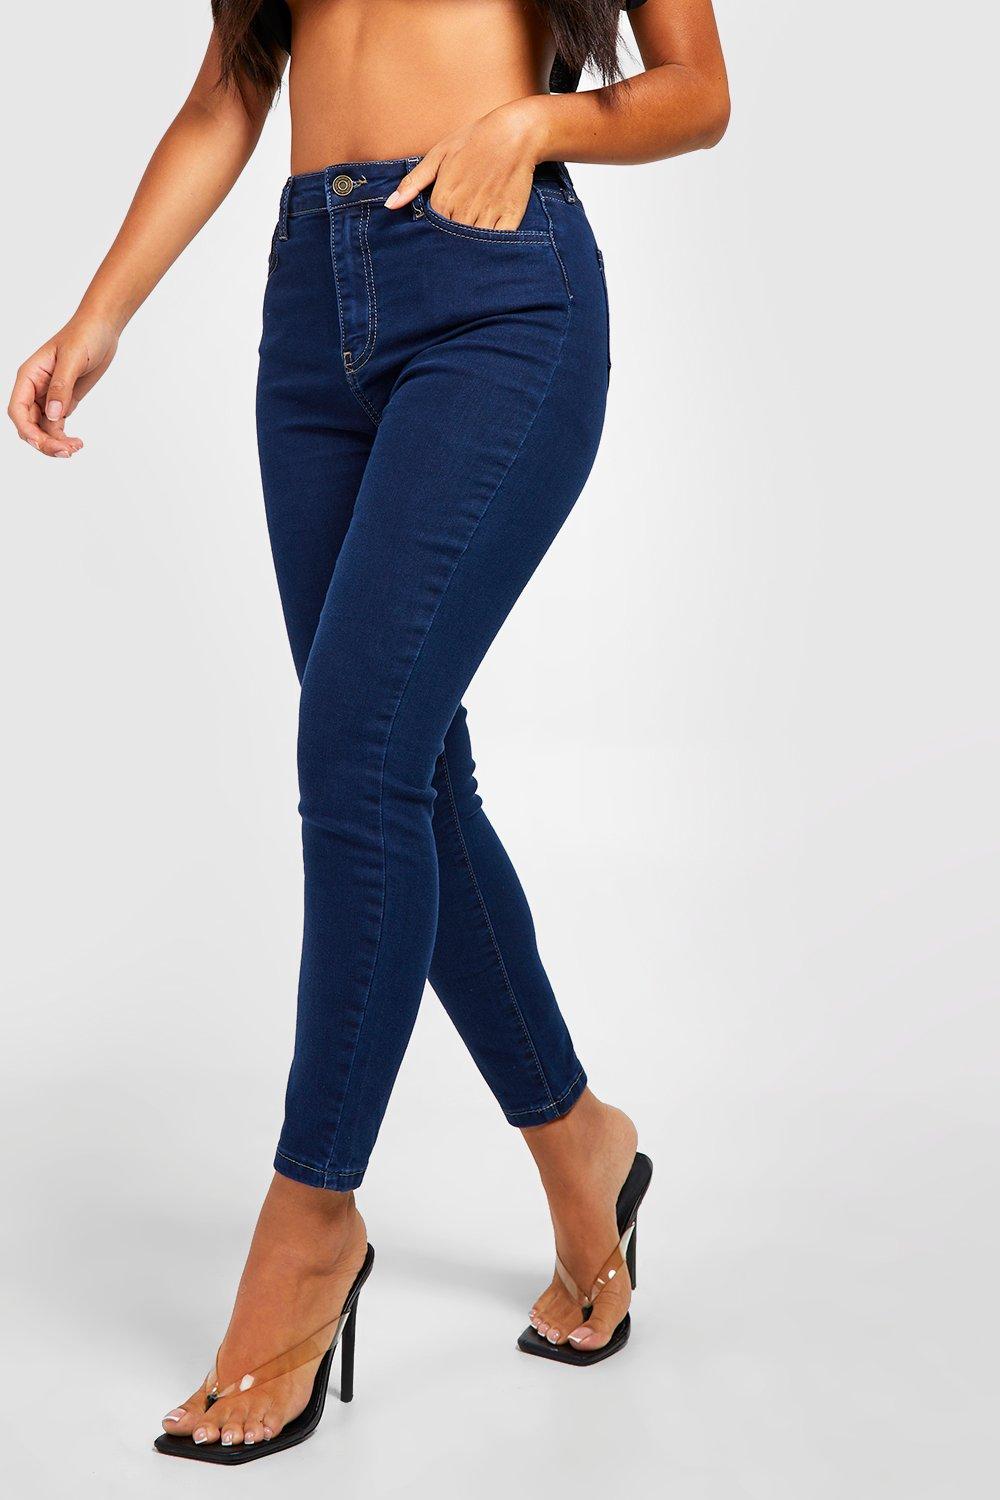 hardop stoeprand betreden Women's Petite Skinny Bum Shaper Jeans | Boohoo UK